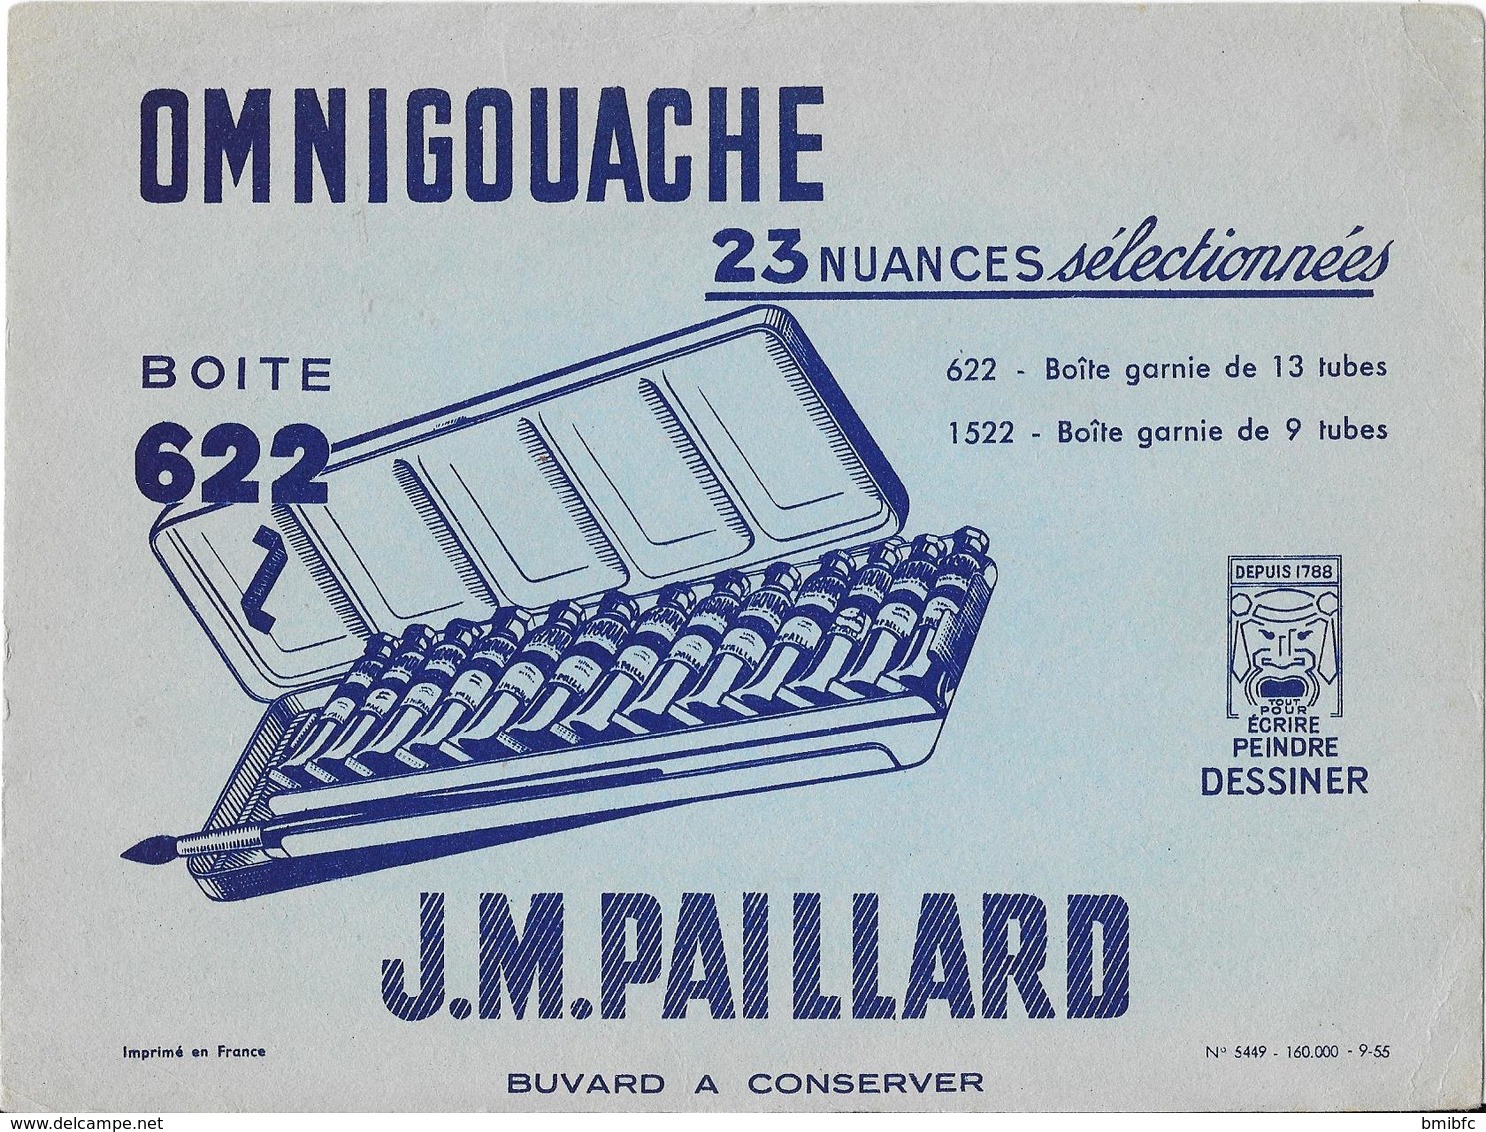 OMNIGOUACHE - J.M. PAILLARD - Peintures